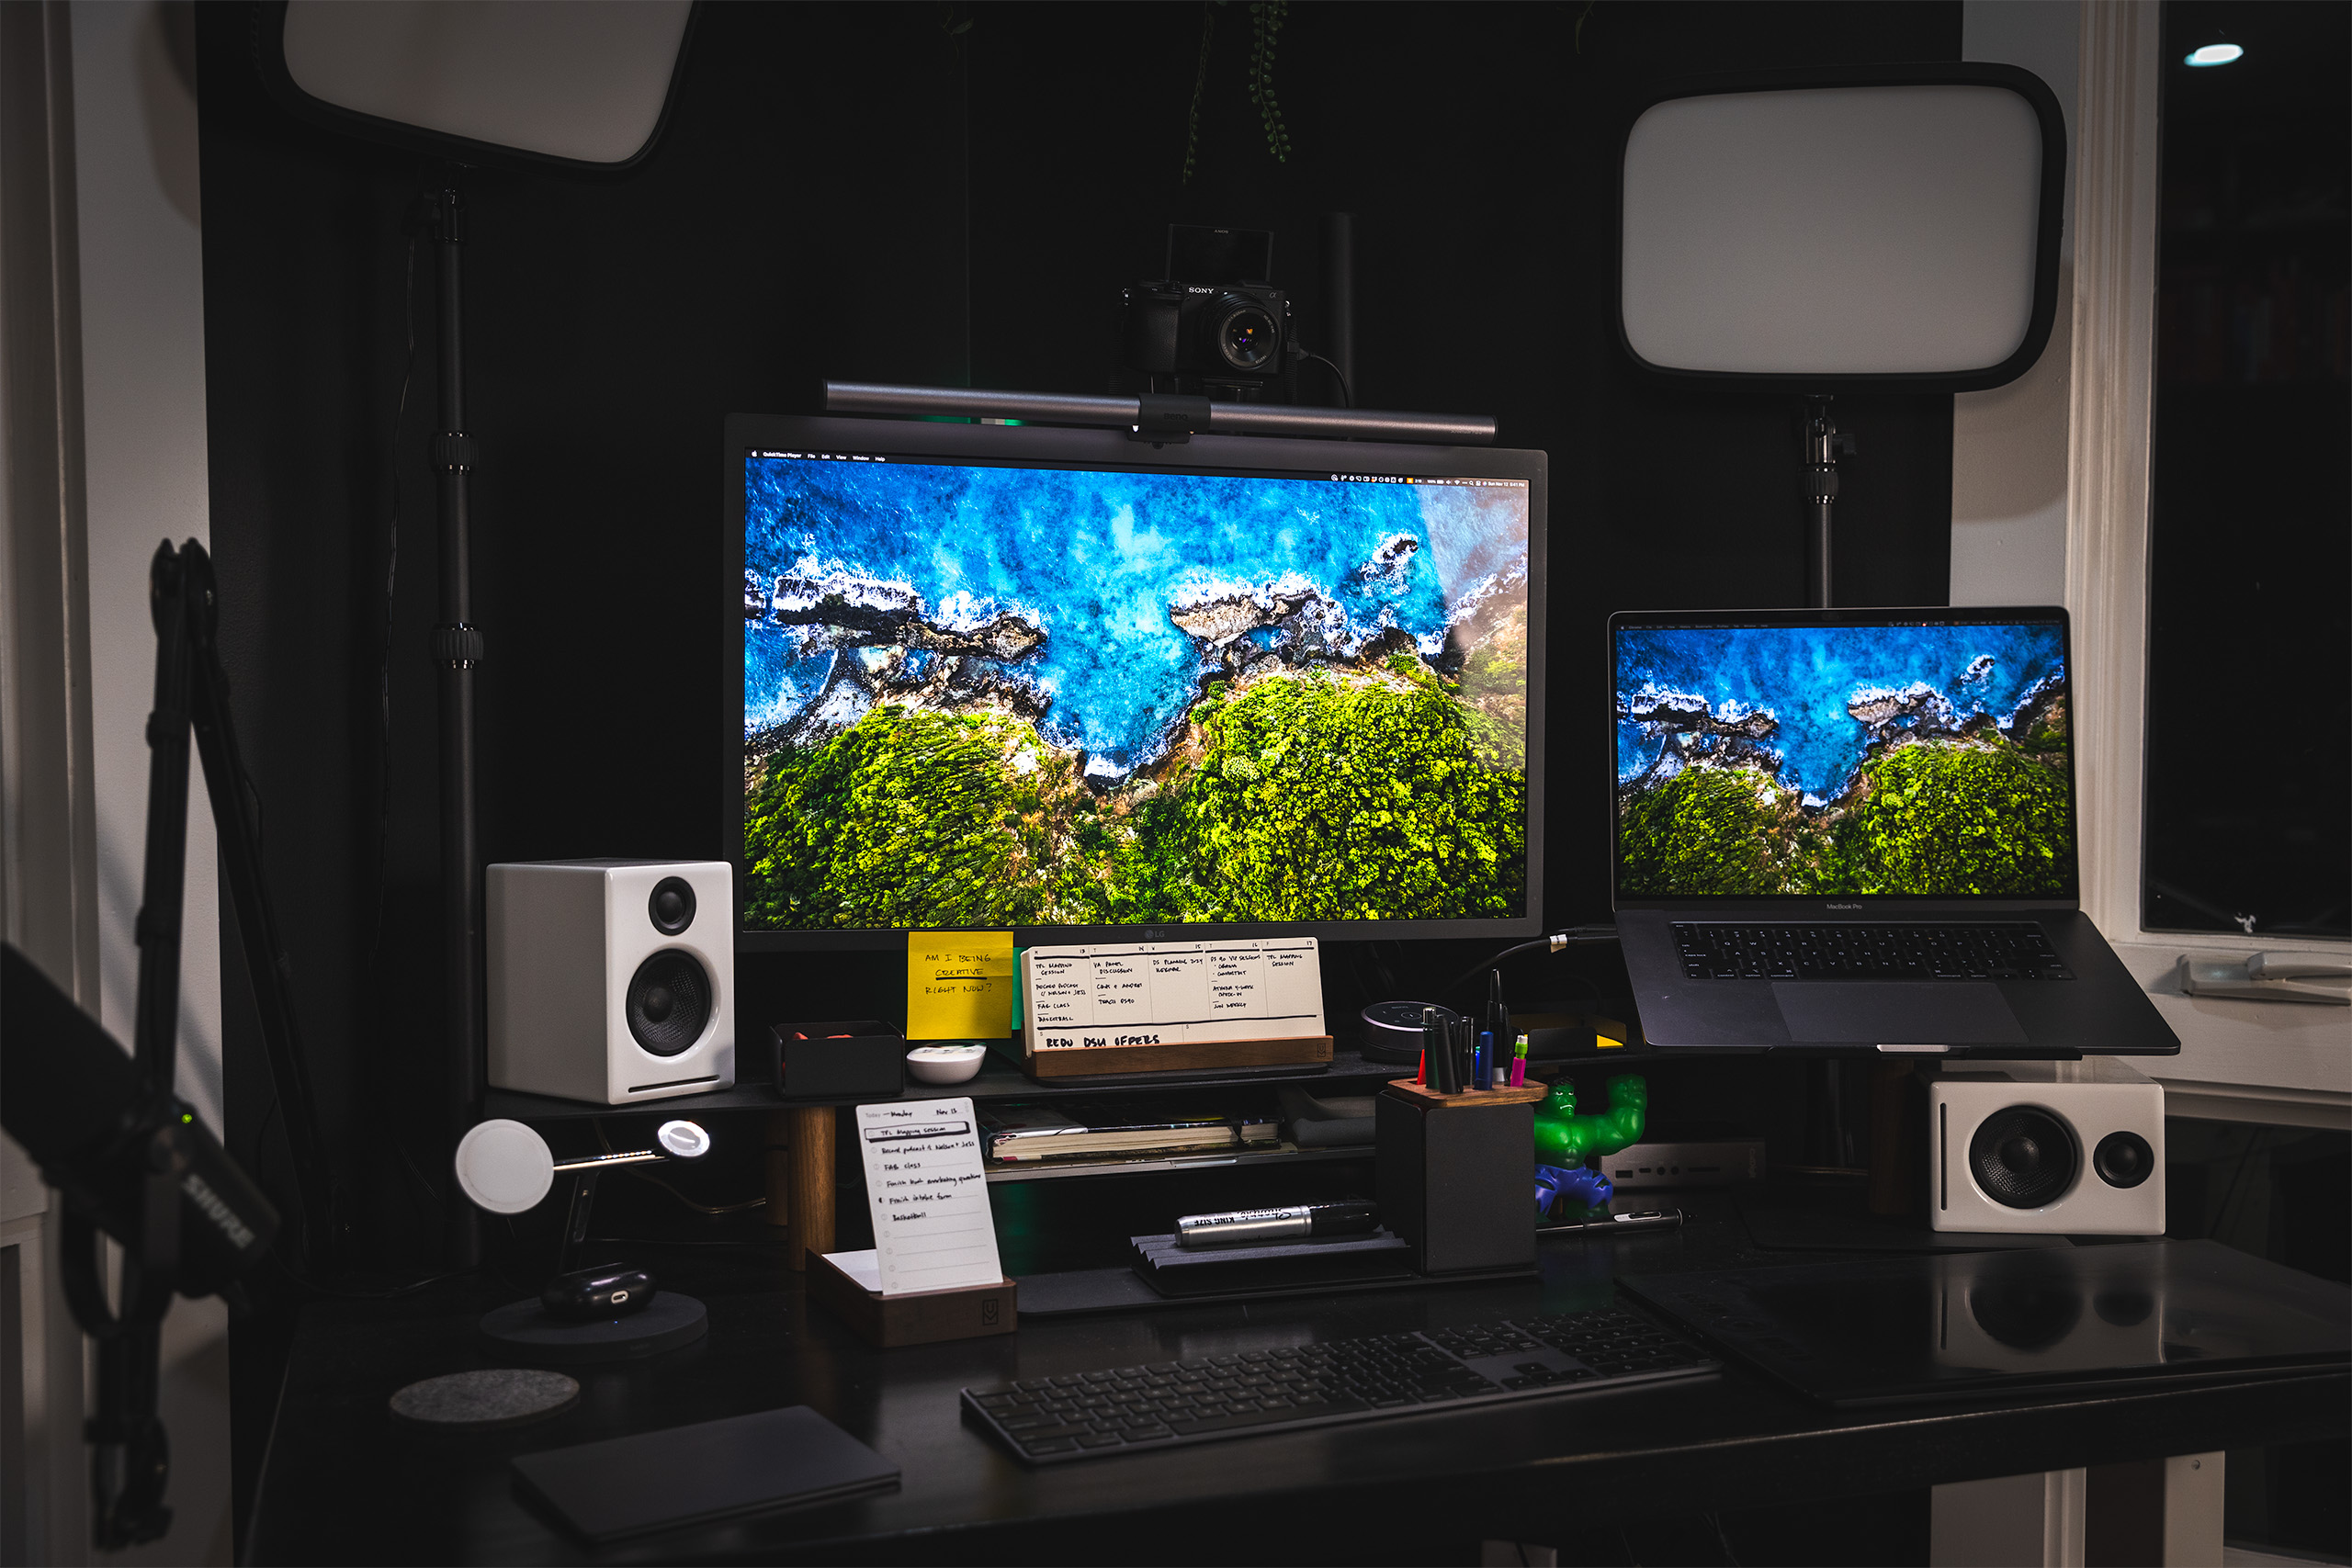 My desk and webcam setup